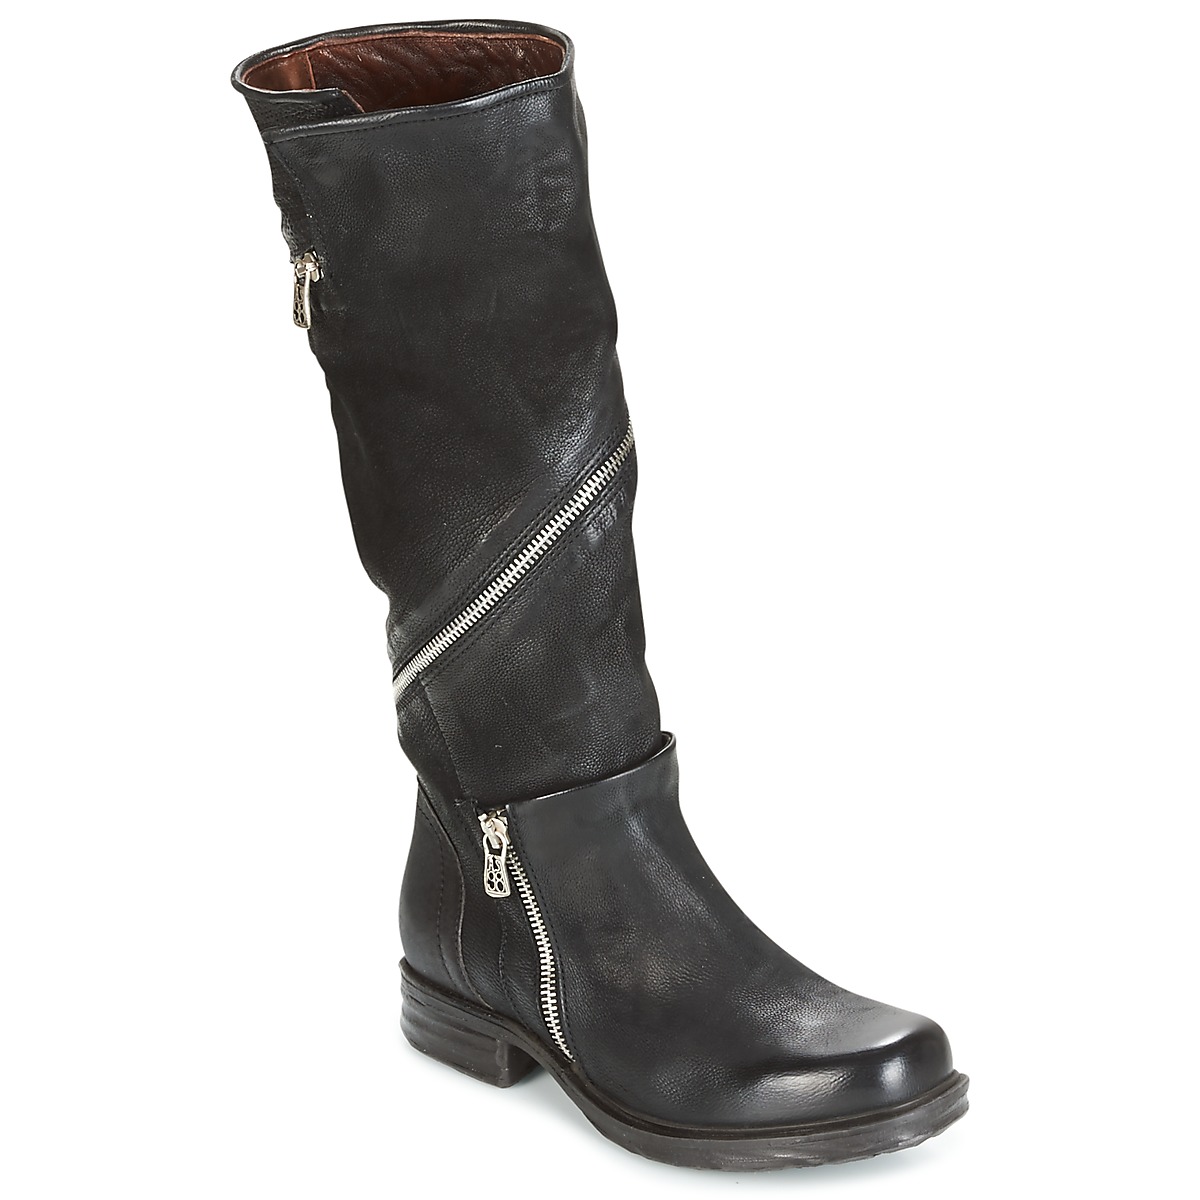 airstep / a.s.98  saint ec zip  women's high boots in black